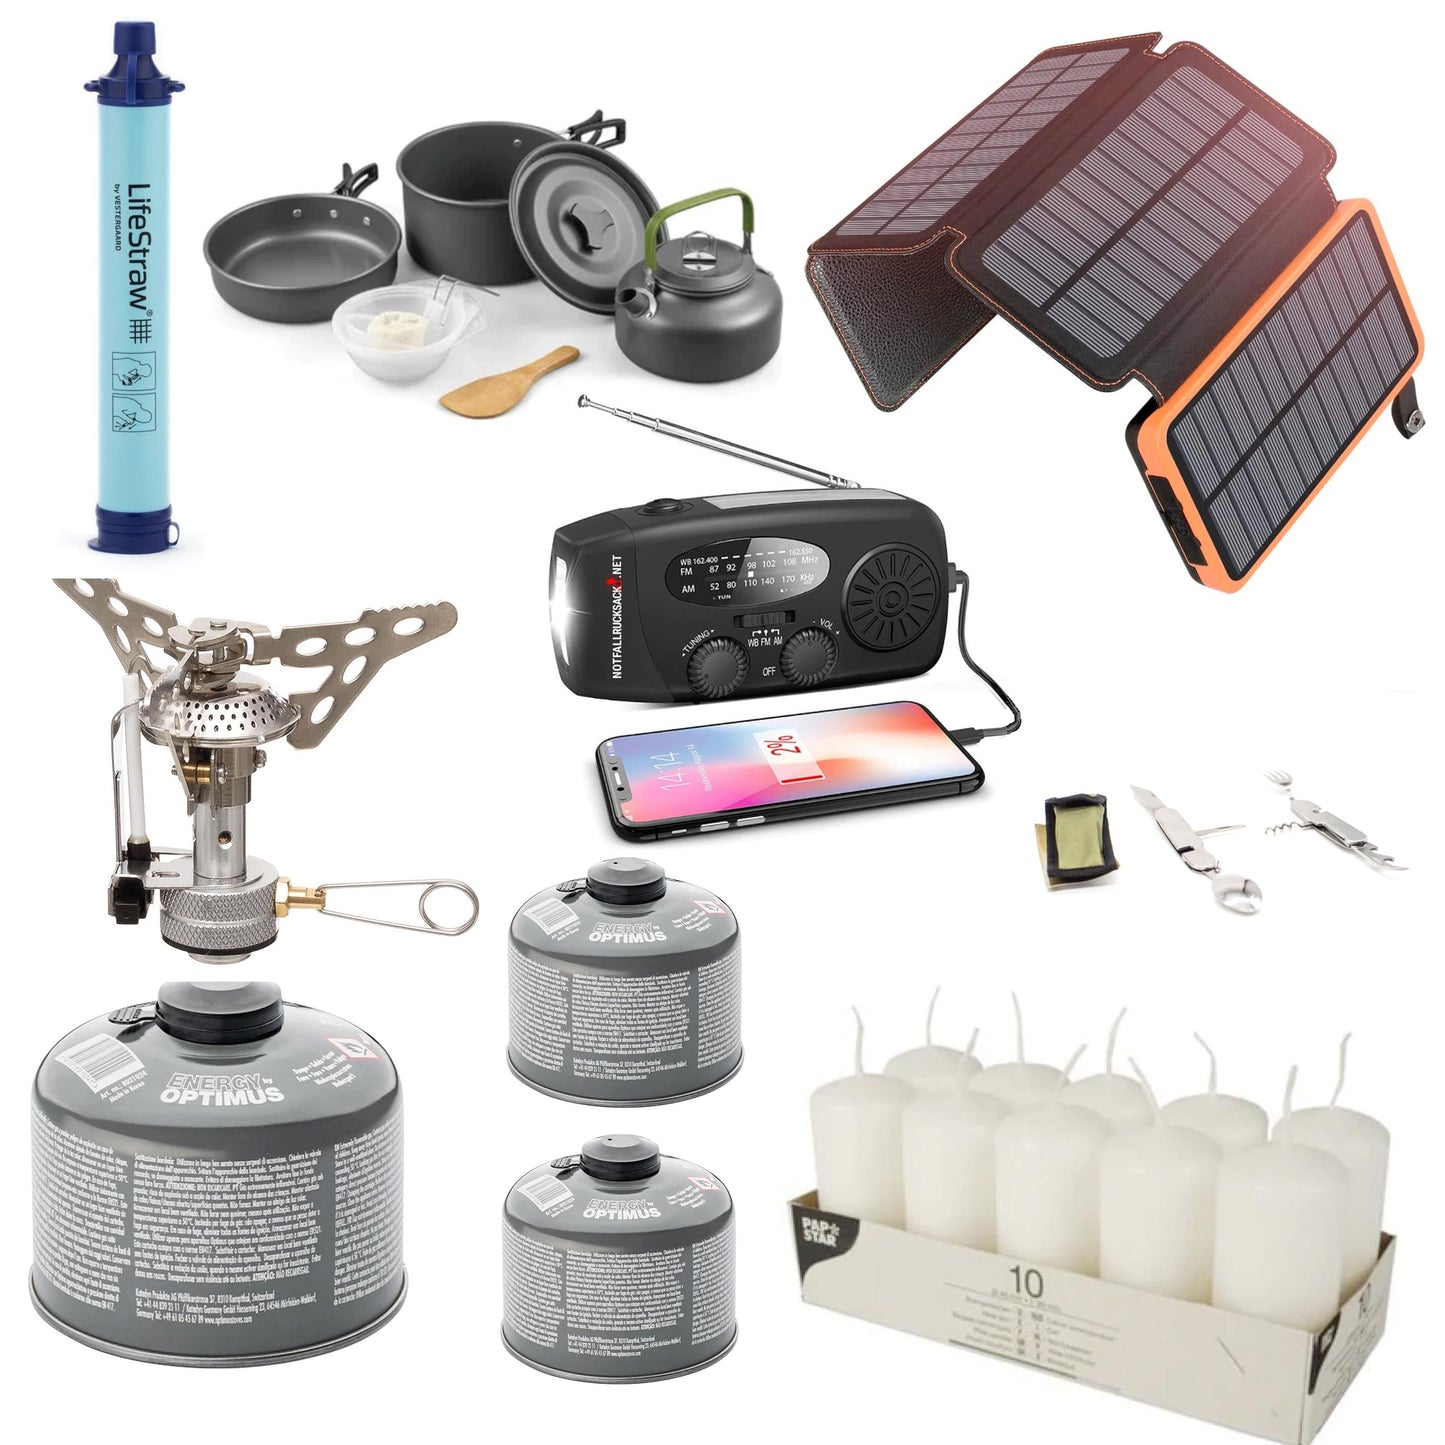 Stromausfallpaket Extreme Blackout kit - mit mega Powerstation, Solarpanel, Gaskocher, Kochset, Besteck, Solarpowerbank Wasserfilter Kerzen u.v.m